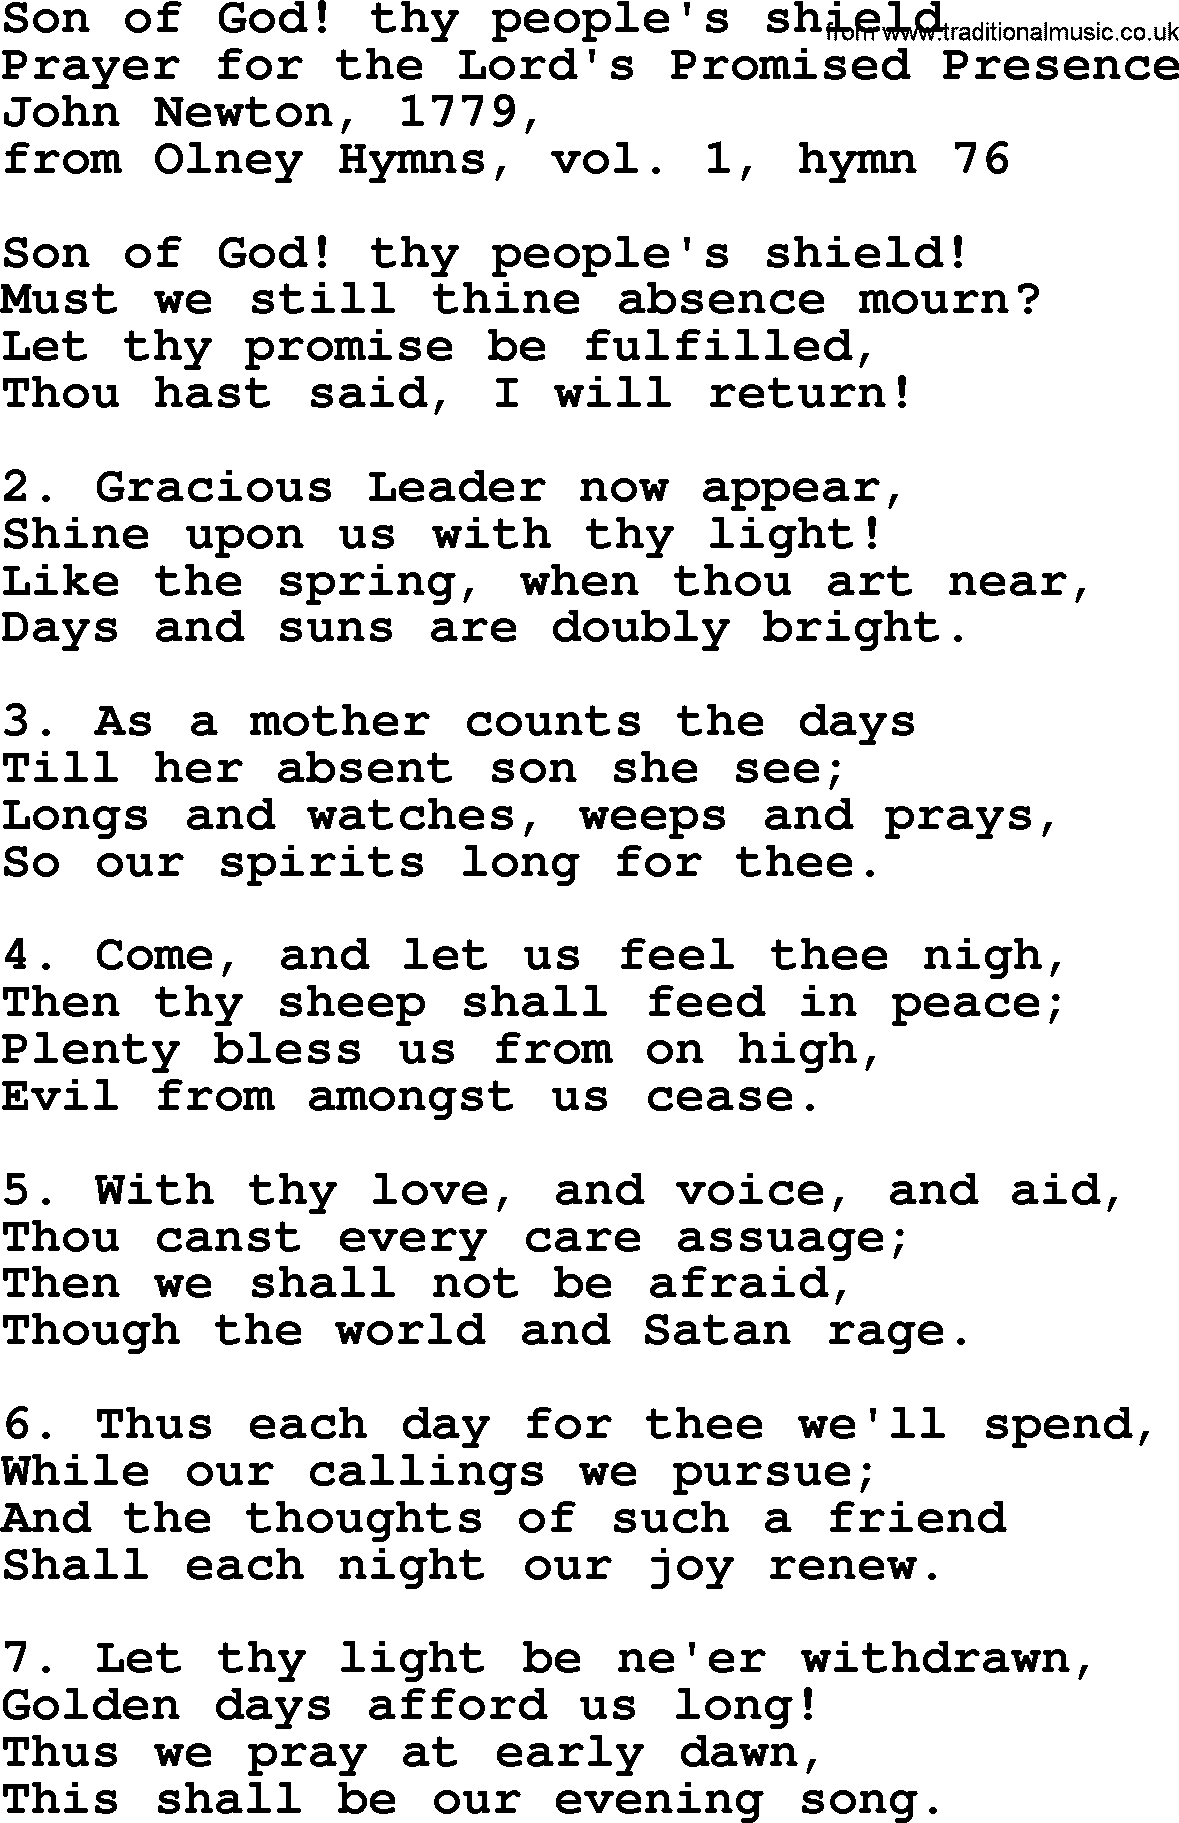 John Newton hymn: Son Of God  Thy People's Shield, lyrics